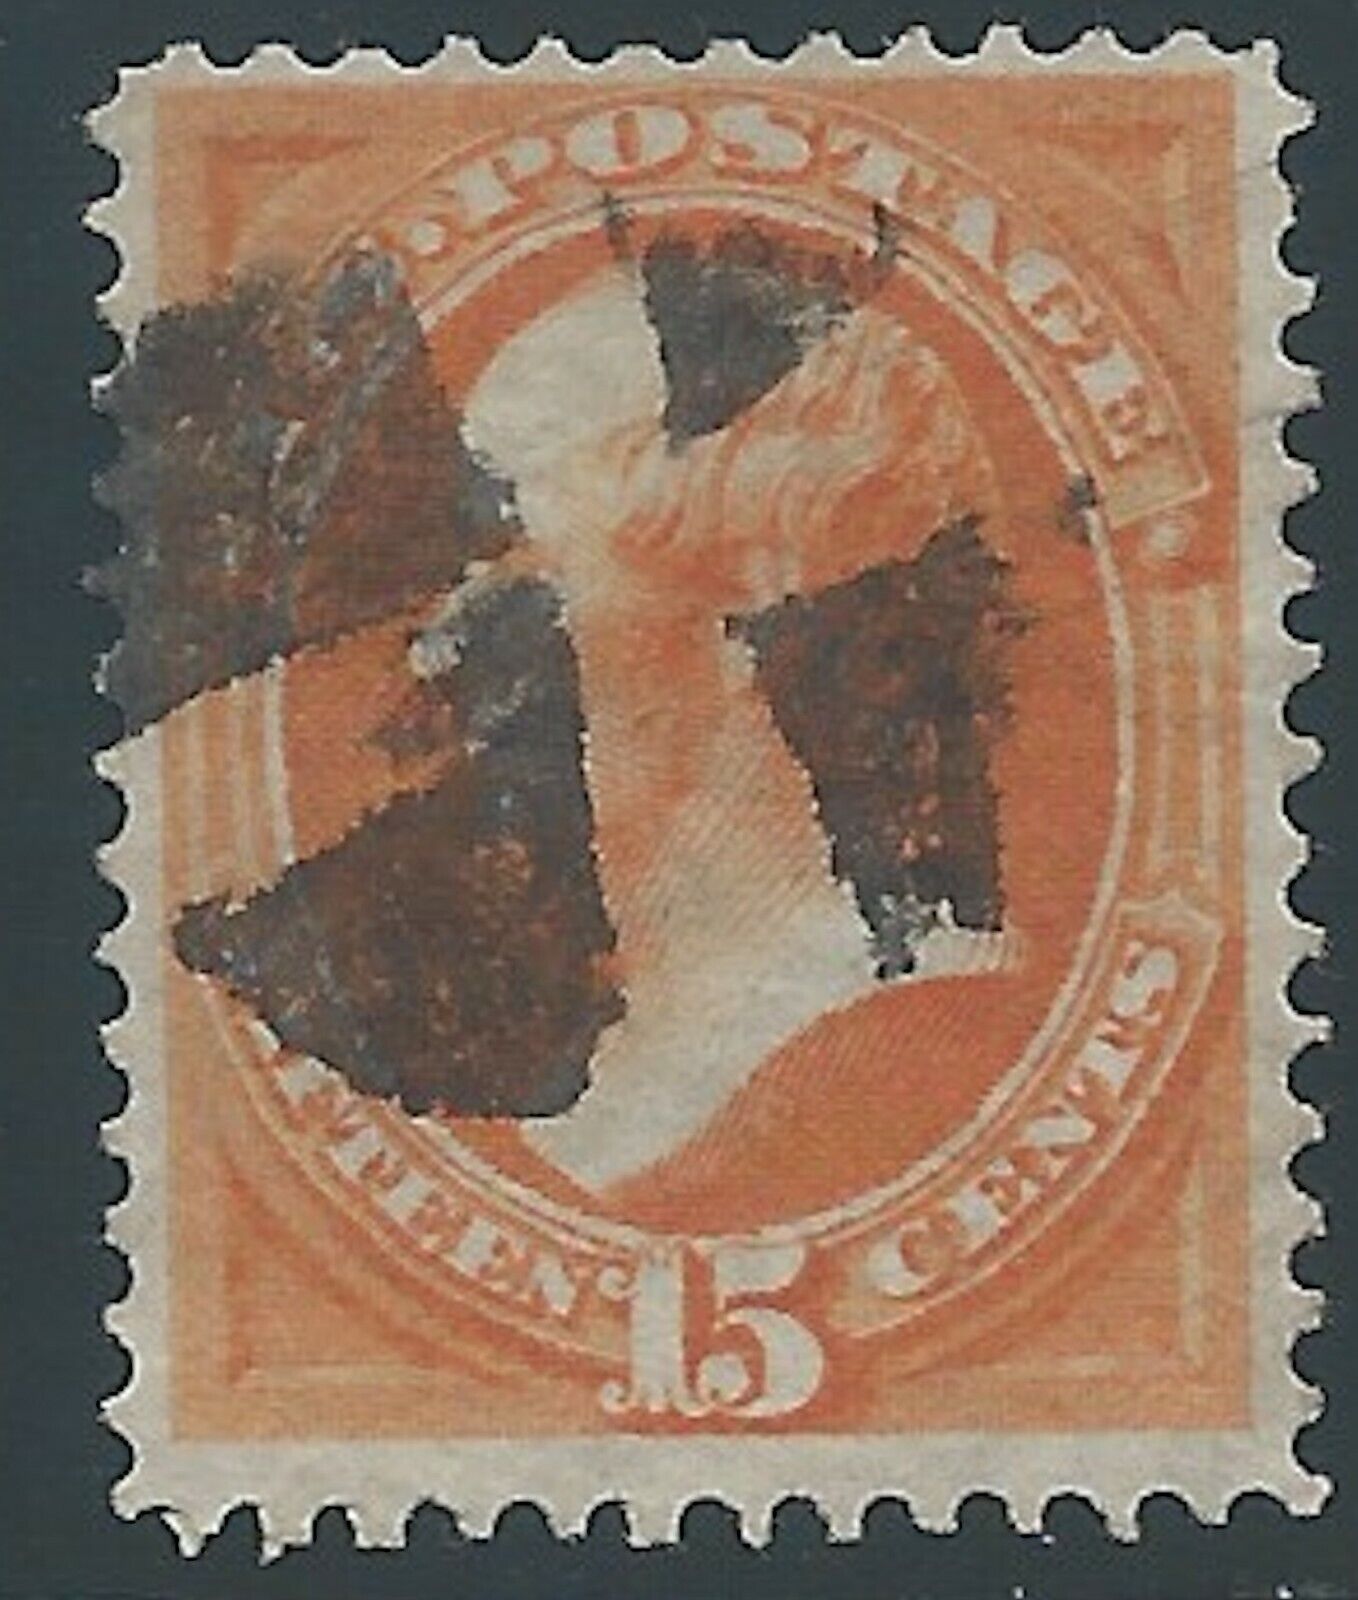 U.S., 1870, Scott #152, 15c Webster, bright orange, Used, Fine - Very Fine